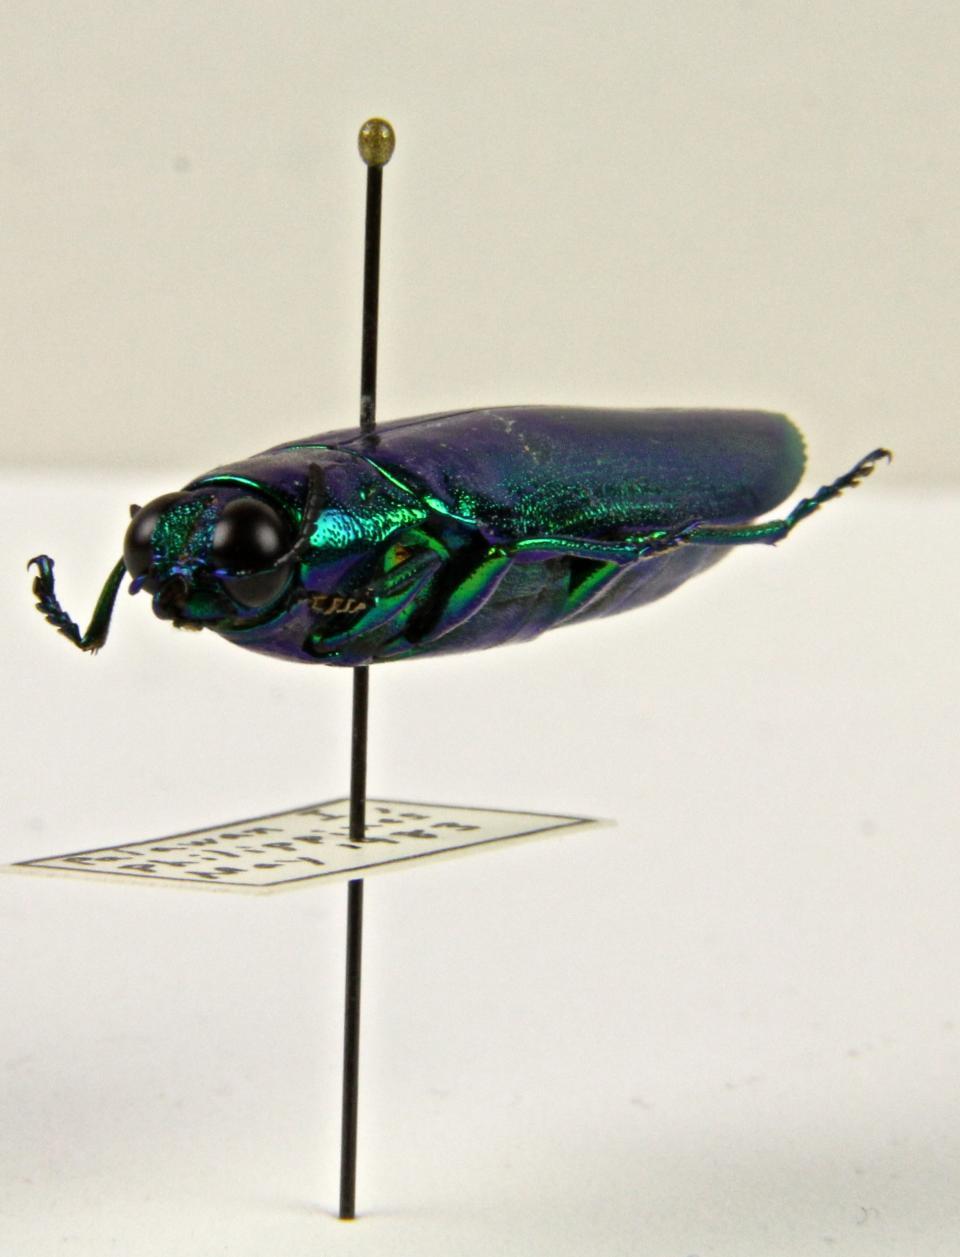 A metallic wood-boring beetle (Buprestidae: Chrysochroa fulminans).